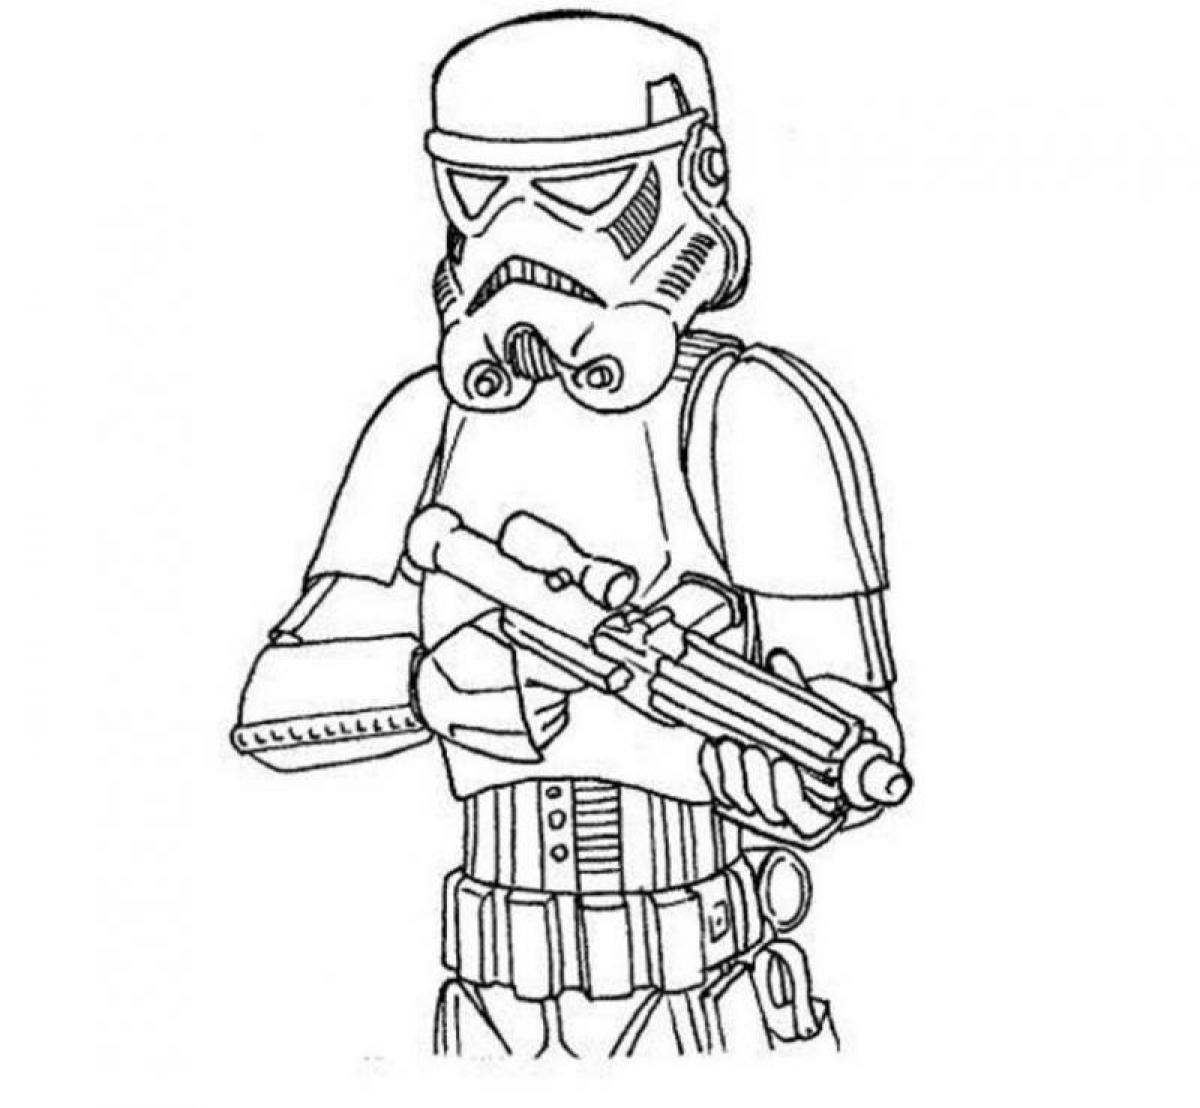 9 Best Images of Baby Stormtrooper Star Wars Printables ...